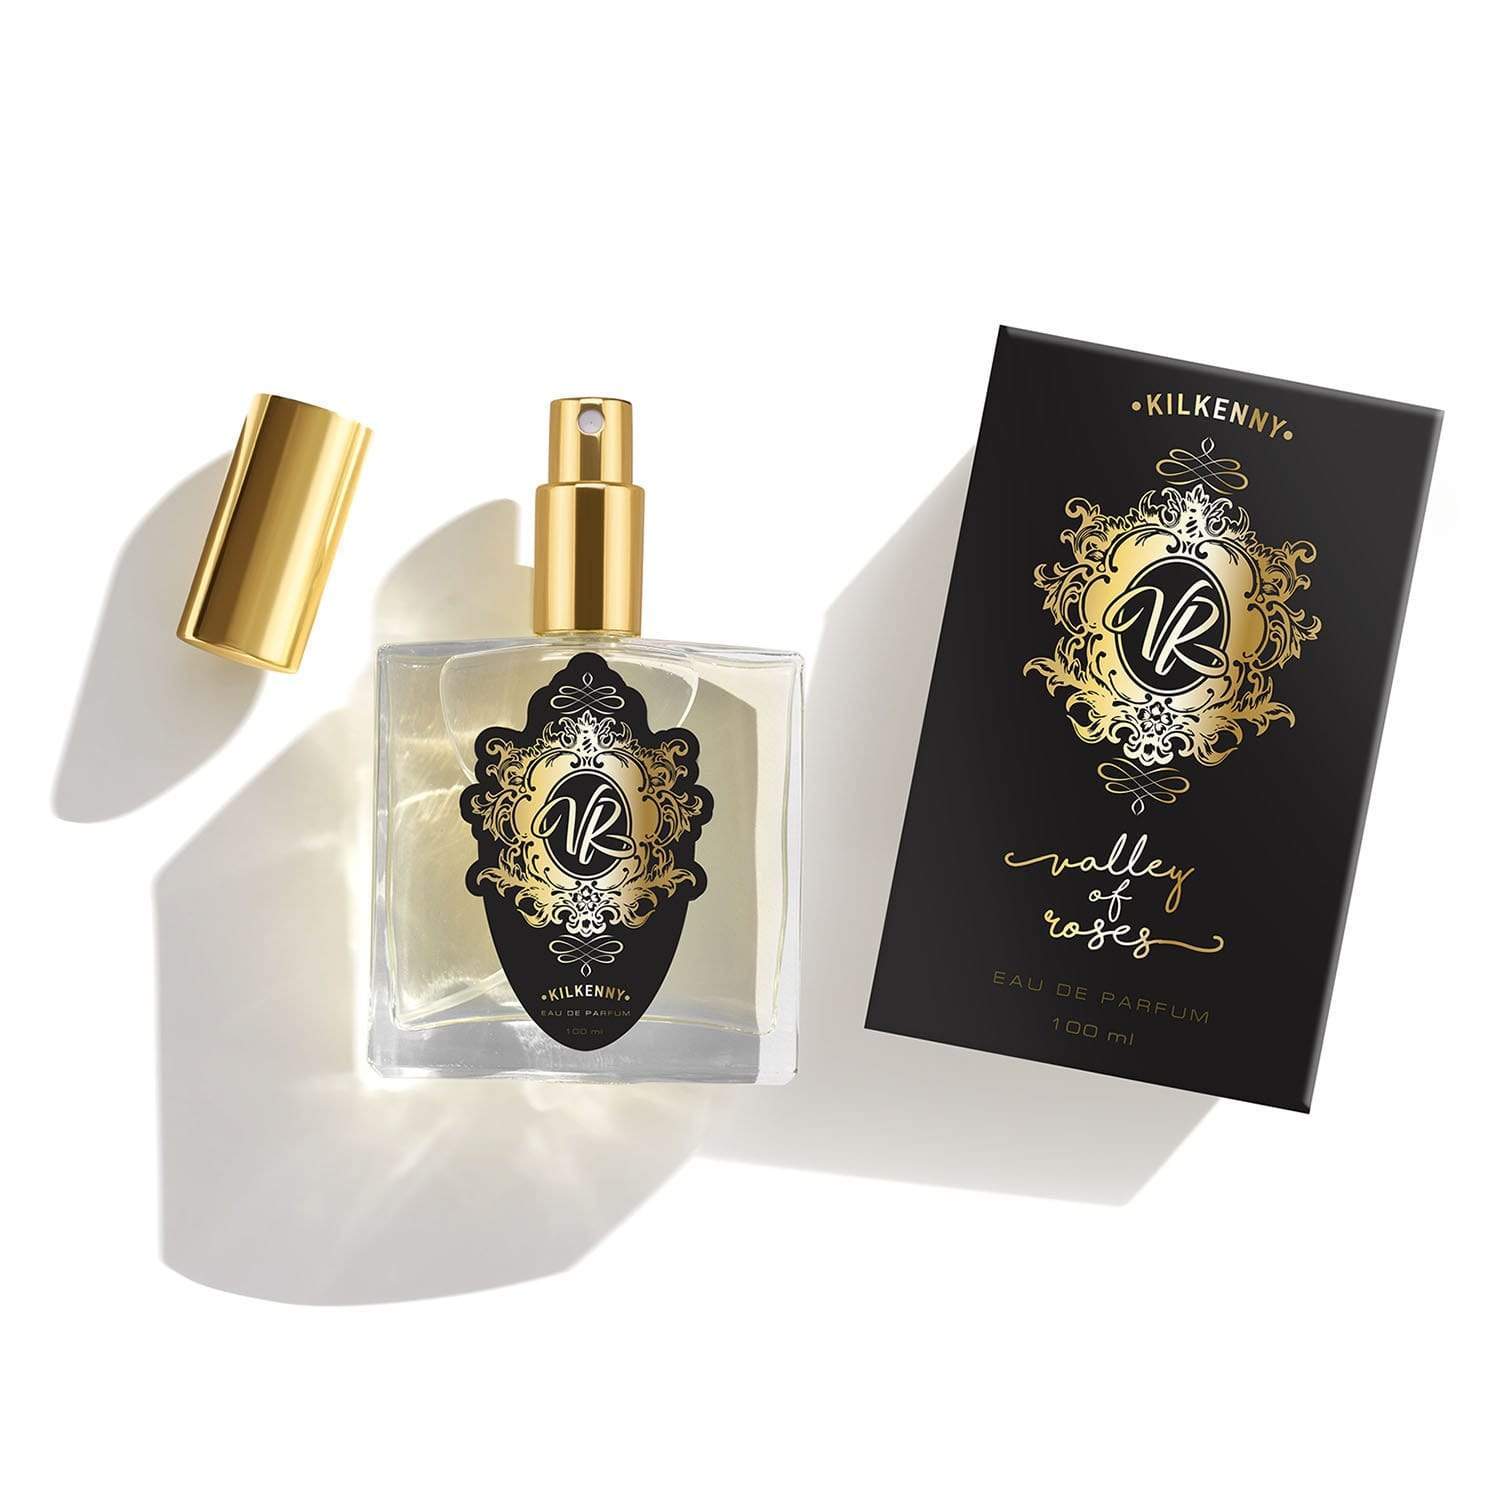 Dupe de Louis Vuitton Meteore! #956 #956valley #mcallentx #rgv #perfu, Perfume